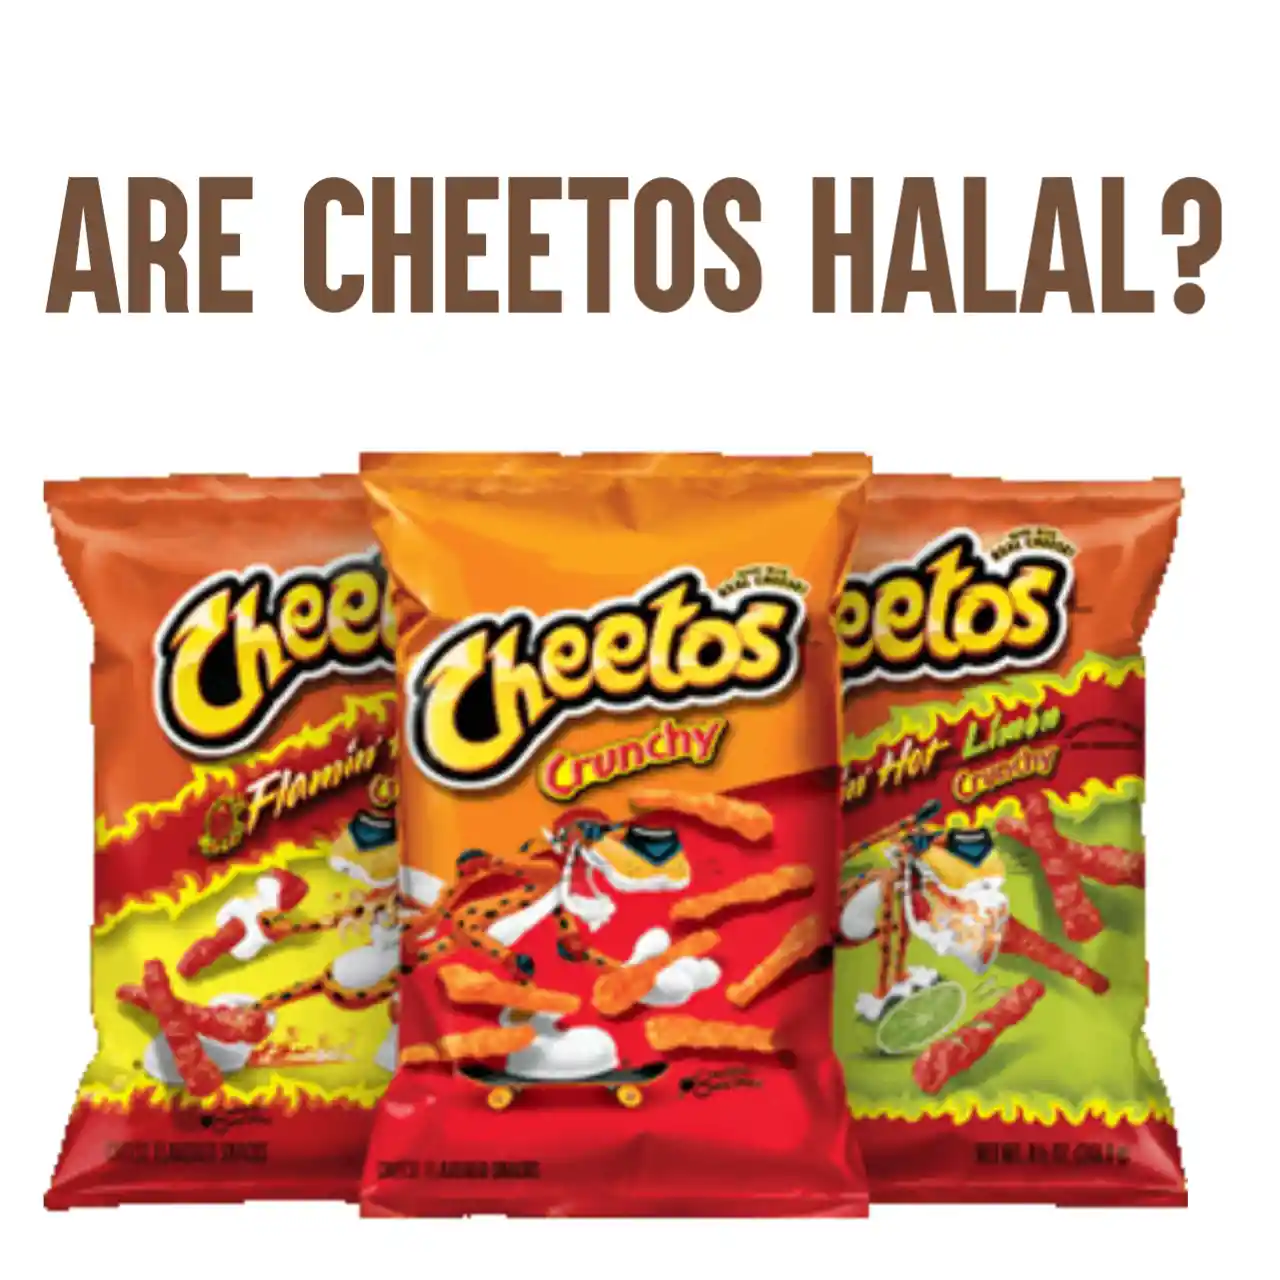 Are cheetos halal